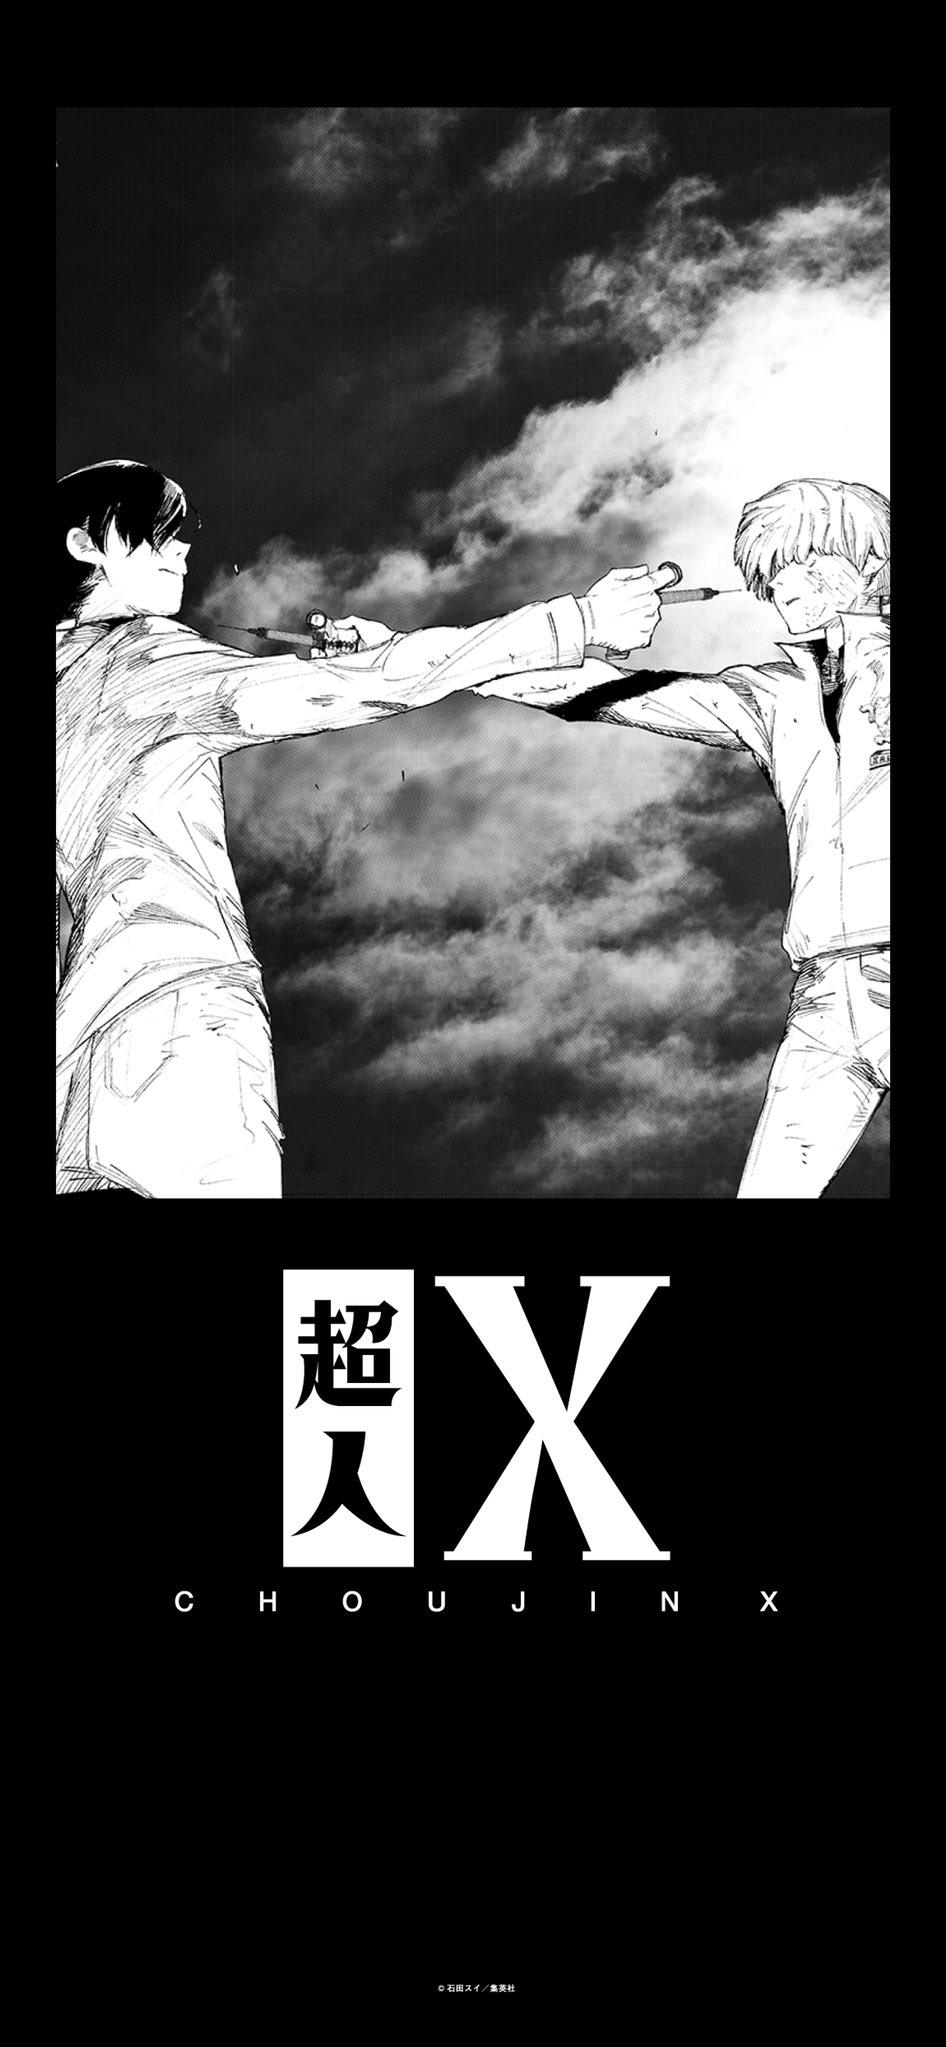 Choujin X On New Phone Wallpaper S T Co